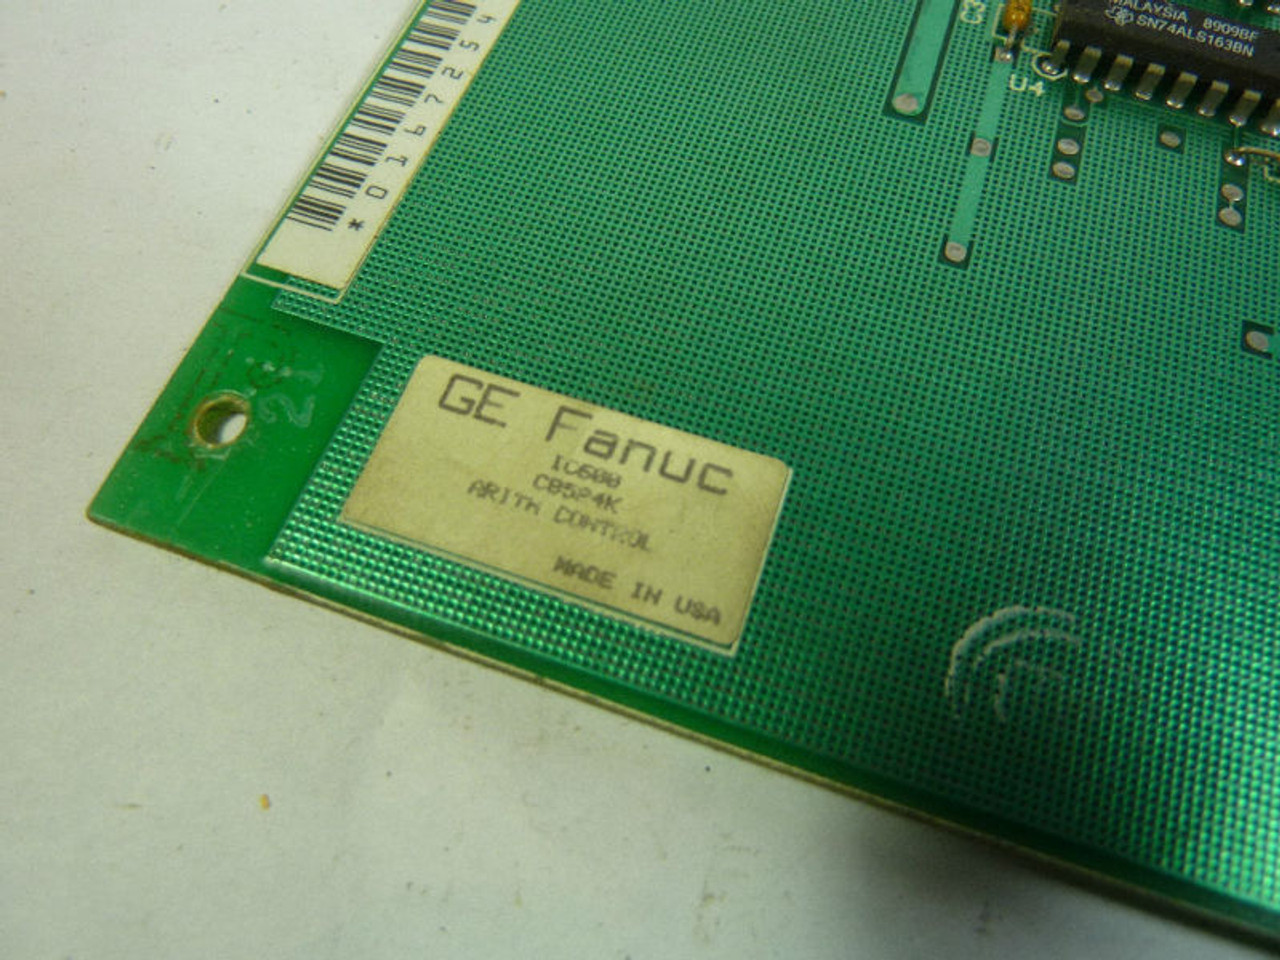 GE Fanuc IC600-CB524K Arithmetic Module USED